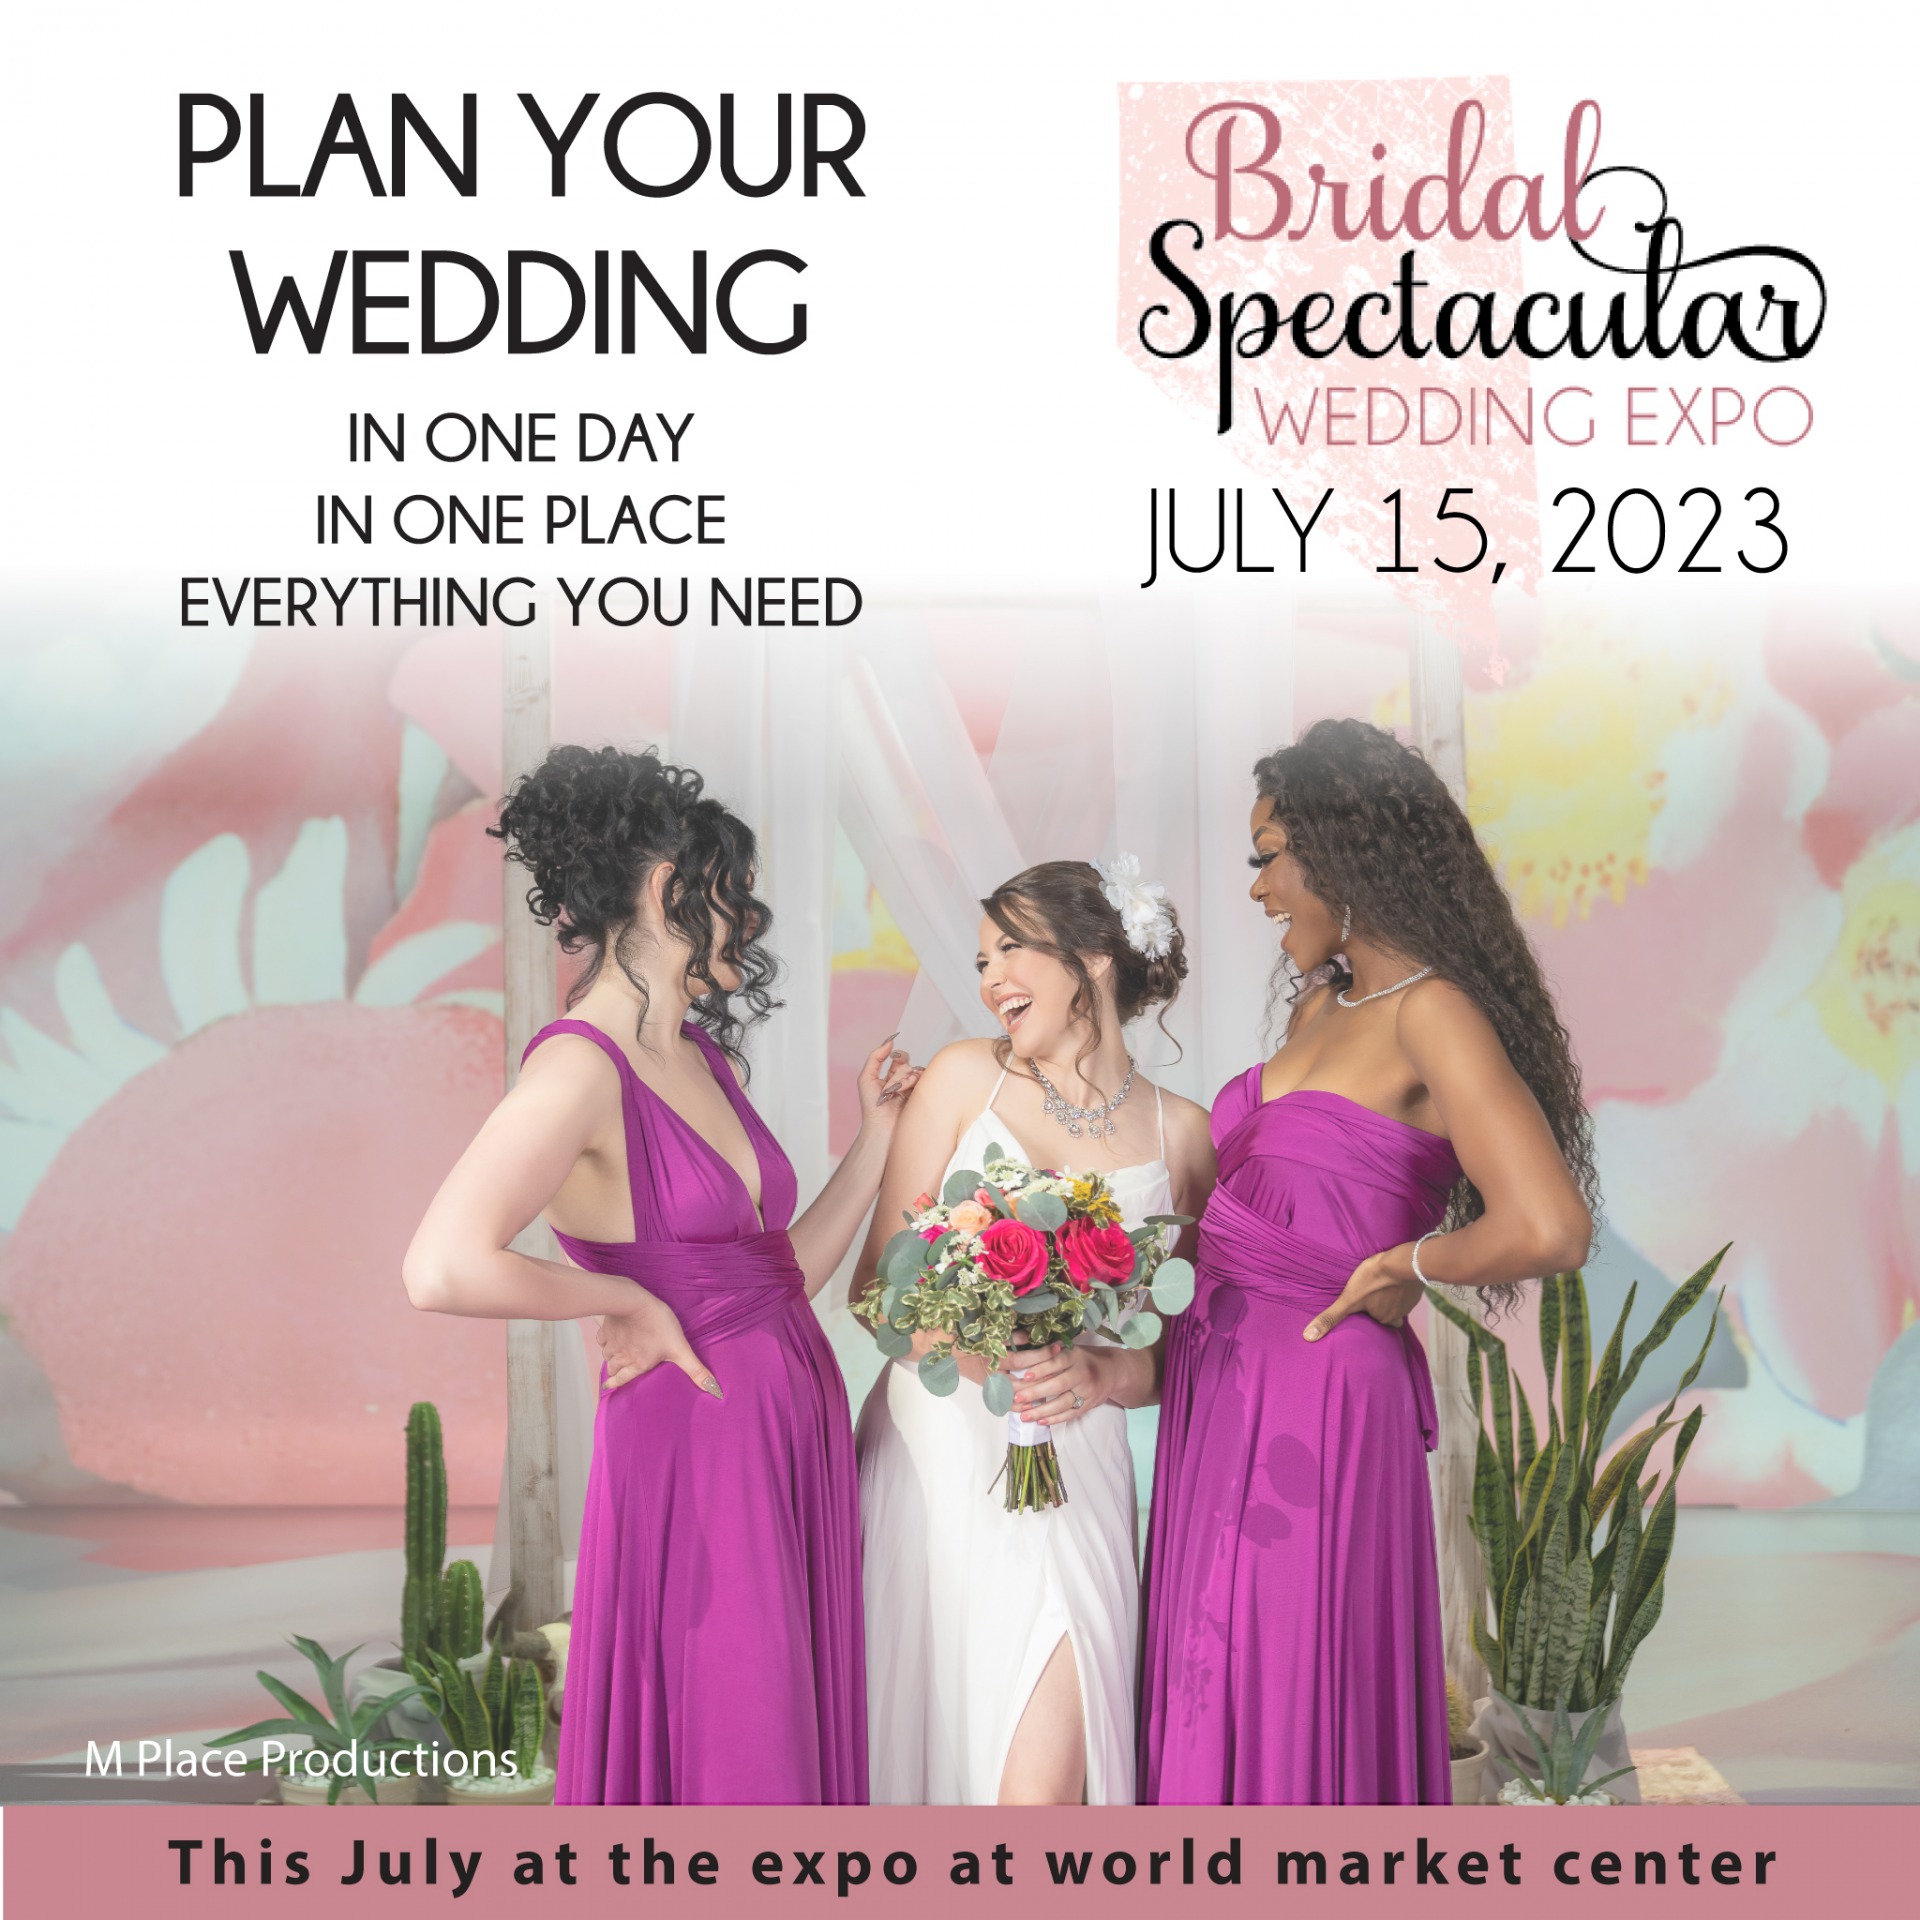 Bridal Spectacular Spotlight – Q&A With the JW Marriott Las Vegas